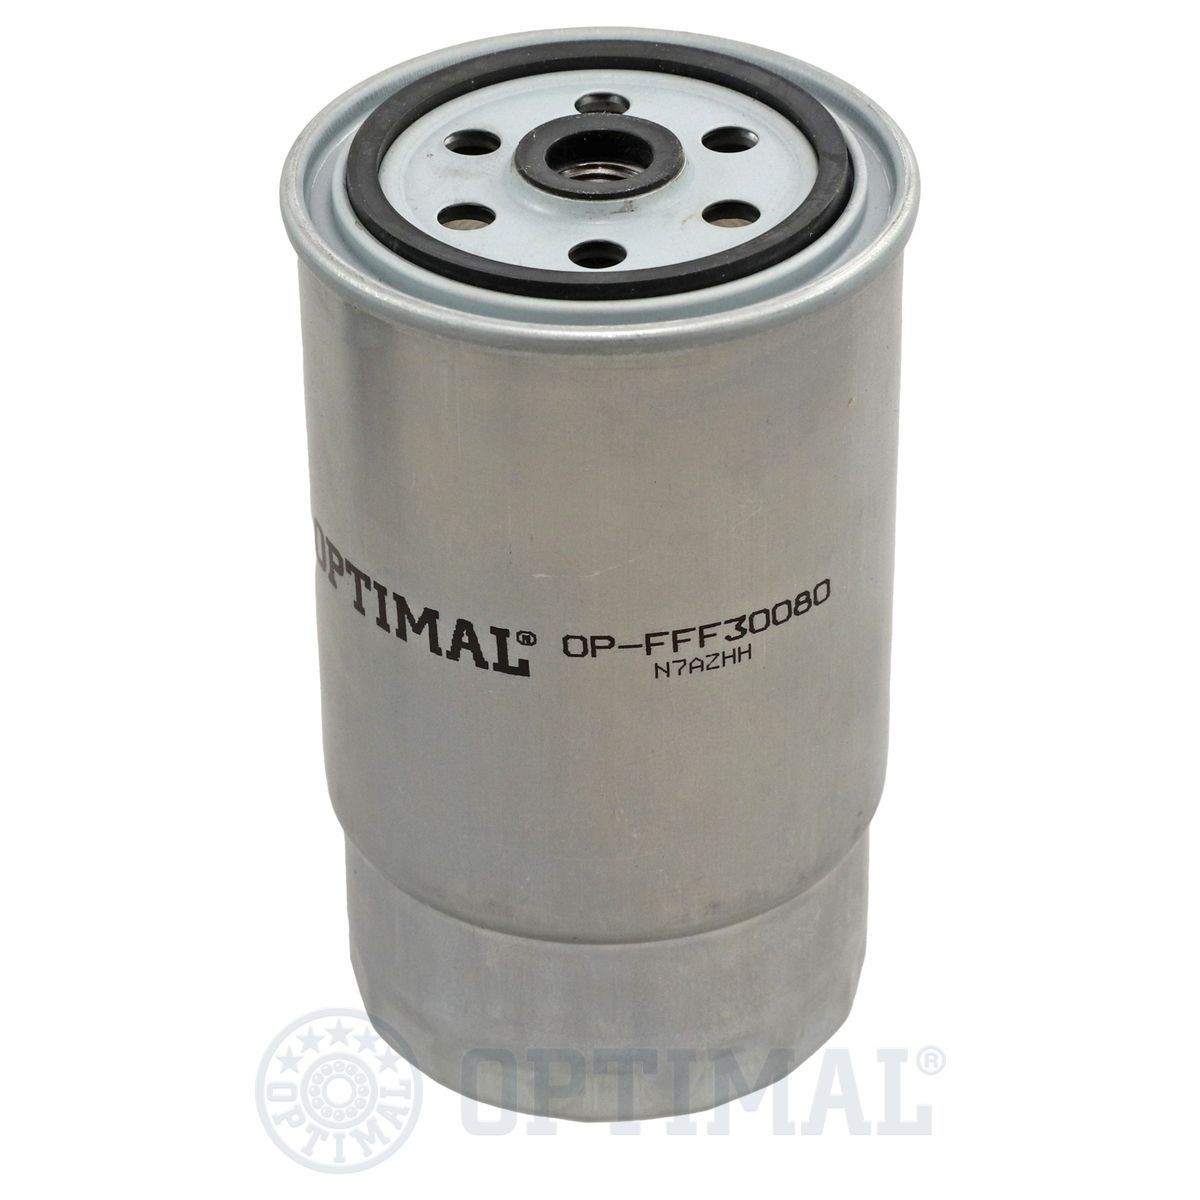 OPTIMAL OP-FFF30080 Fuel filter 45312010F